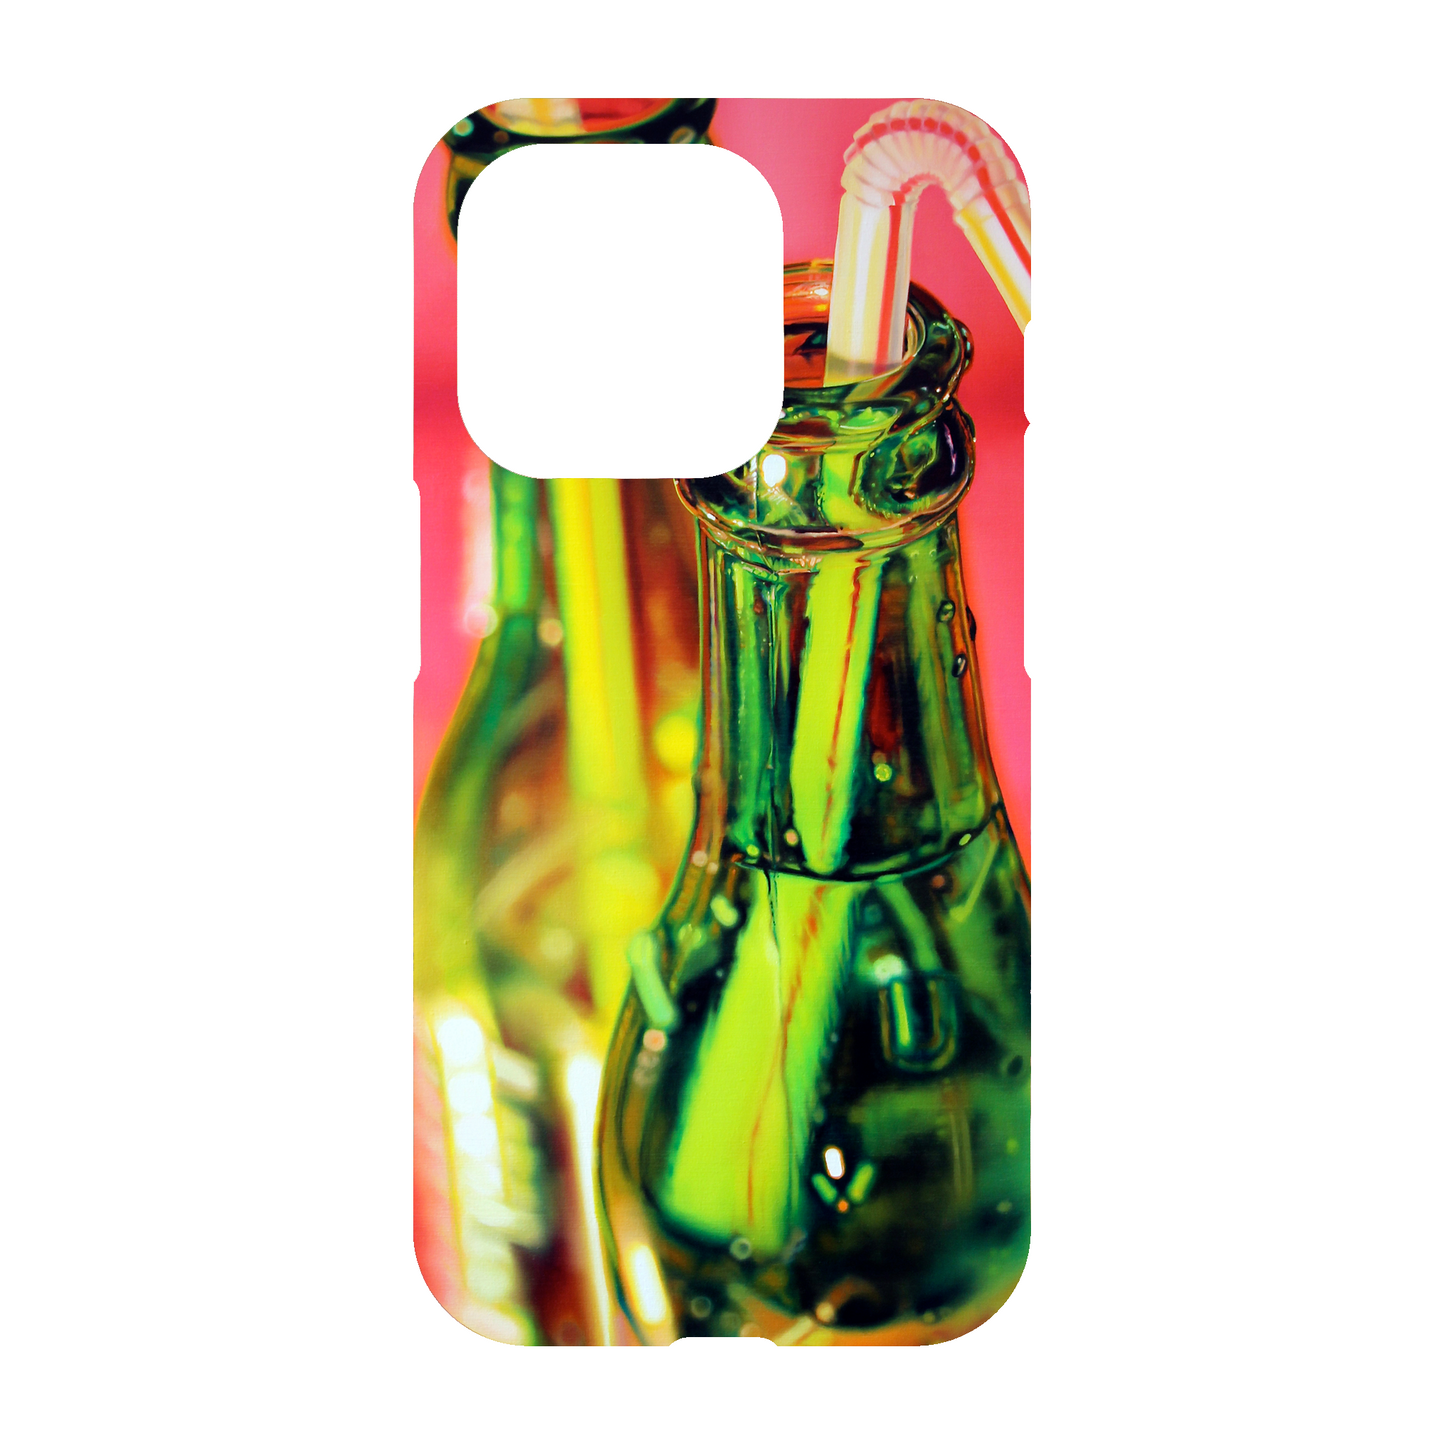 Two Green Bottles Snap Phone Case - alternative phone models